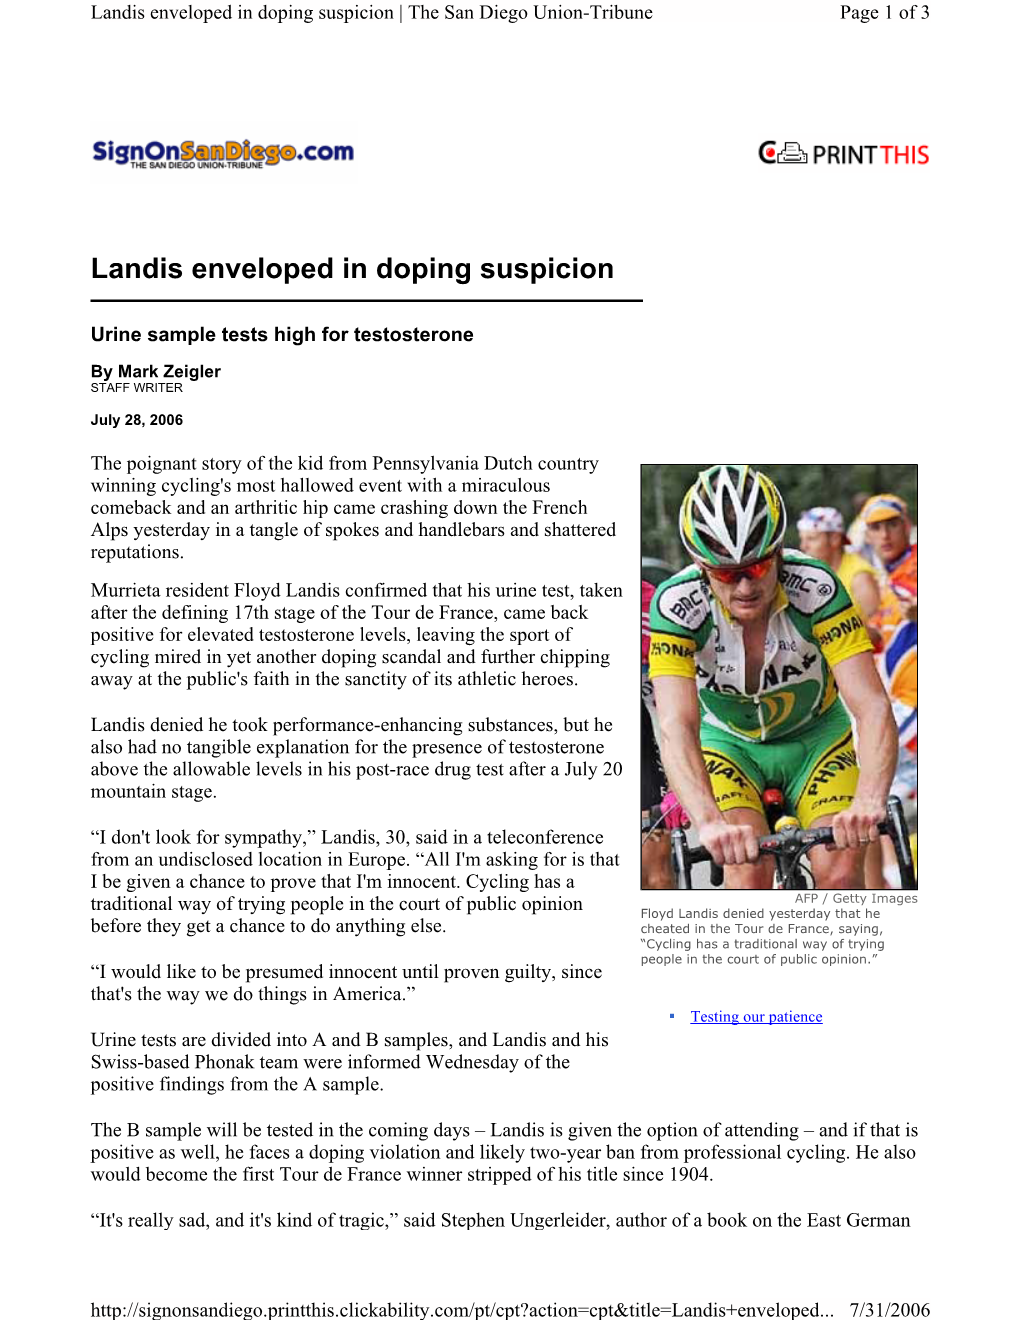 Landis Enveloped in Doping Suspicion | the San Diego Union-Tribune Page 1 of 3